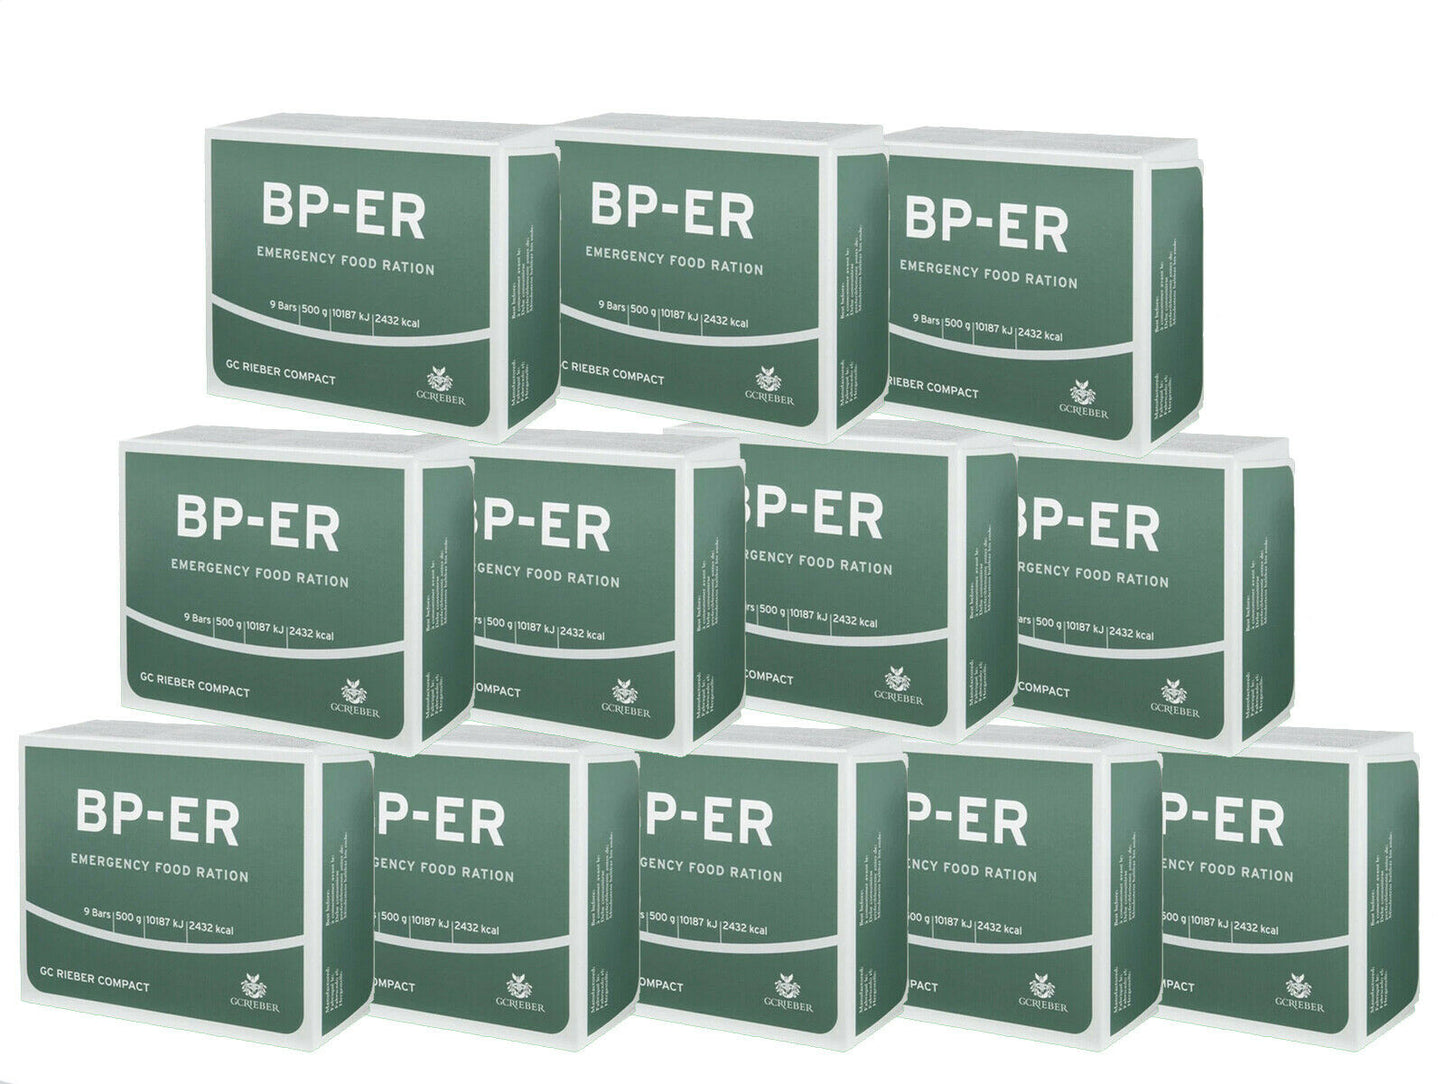 Ración de emergencia BP-ER - Ración de emergencia compacta, duradera y ligera BP-ER